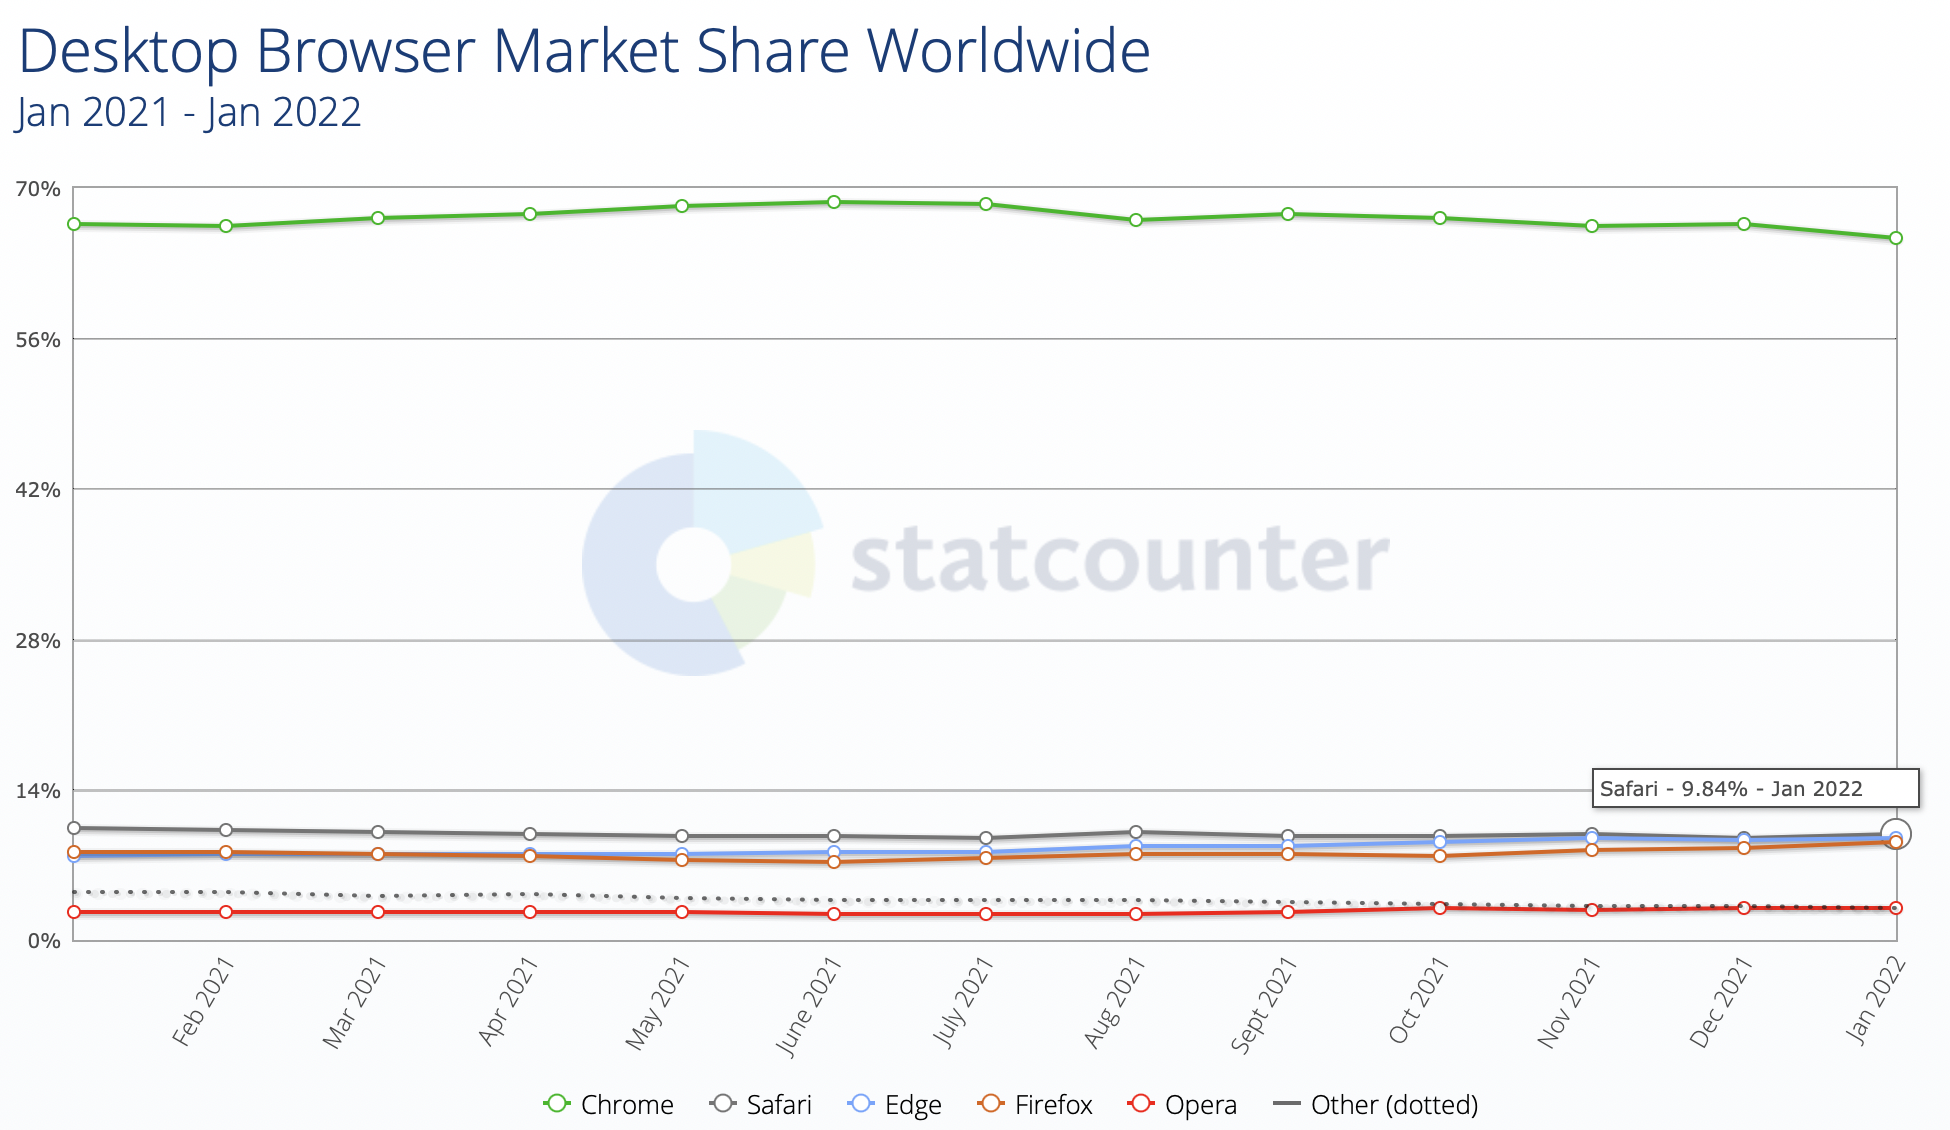 Safari desktop market share.